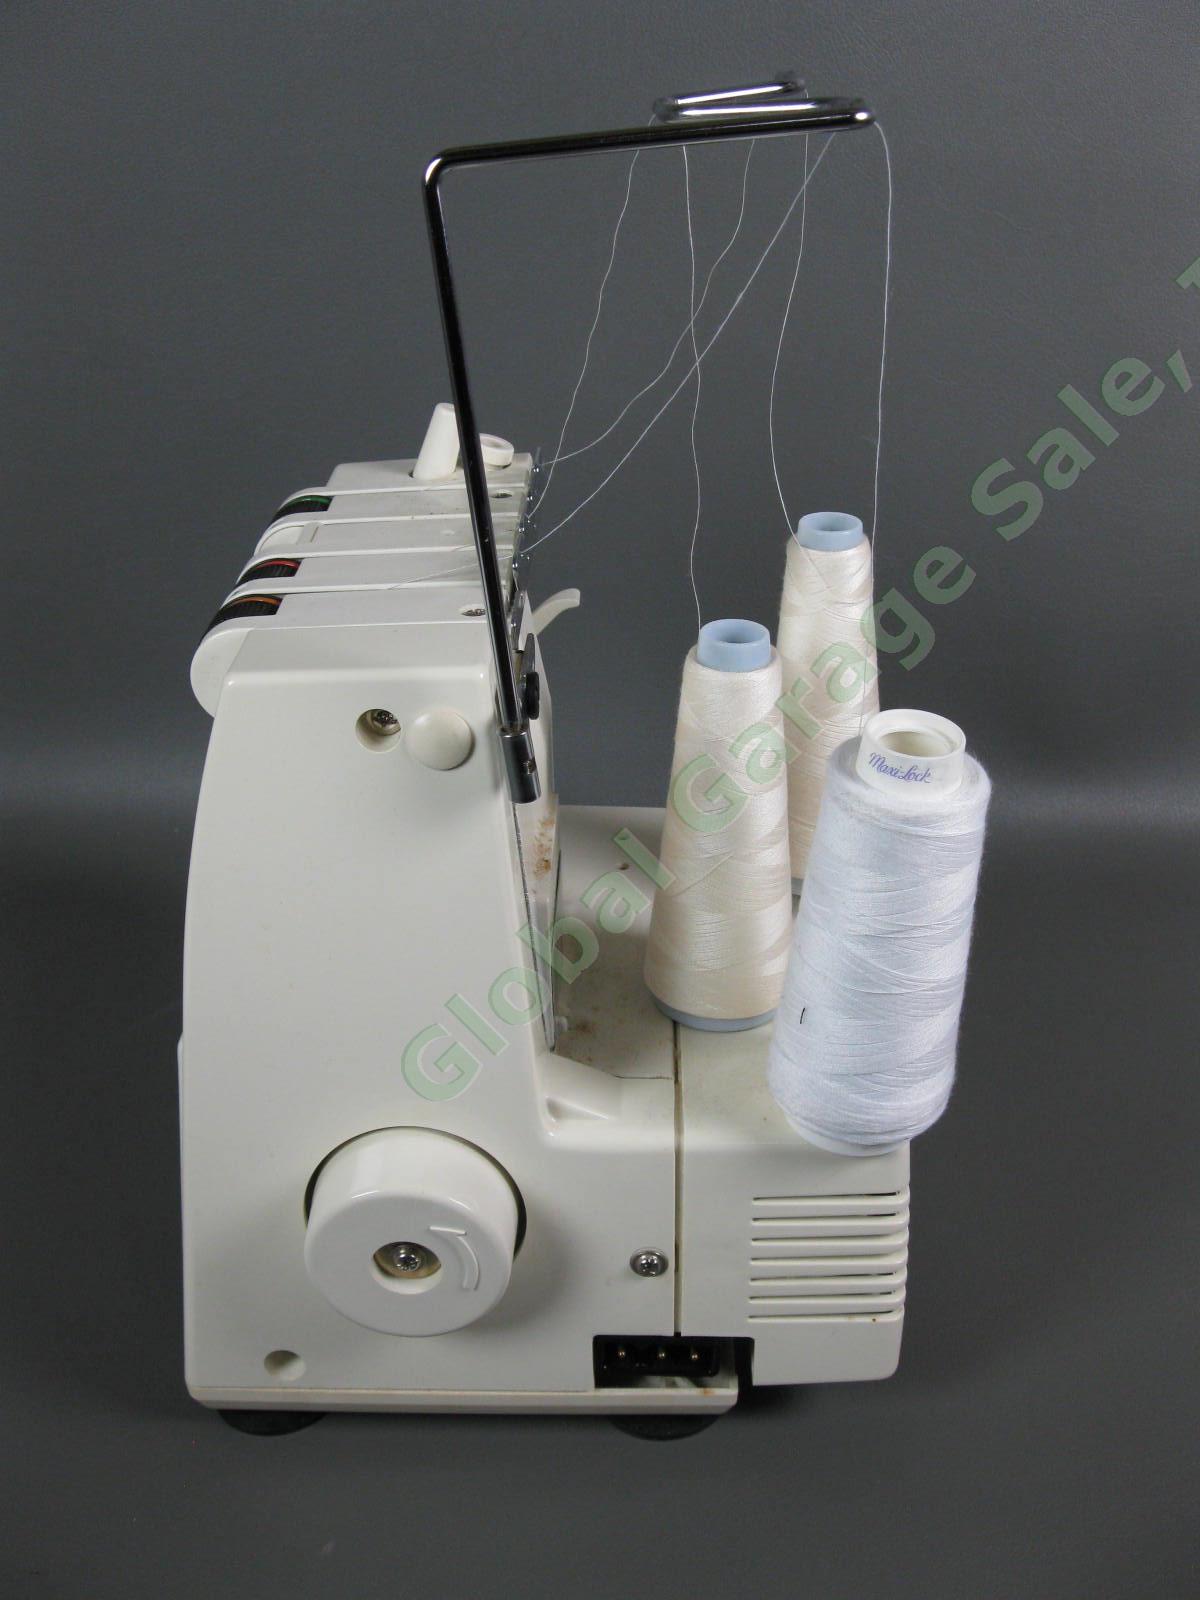 Singer Ultralock 14U32A Serger Sewing Machine Tested Runs Great Pedal Power Cord 2